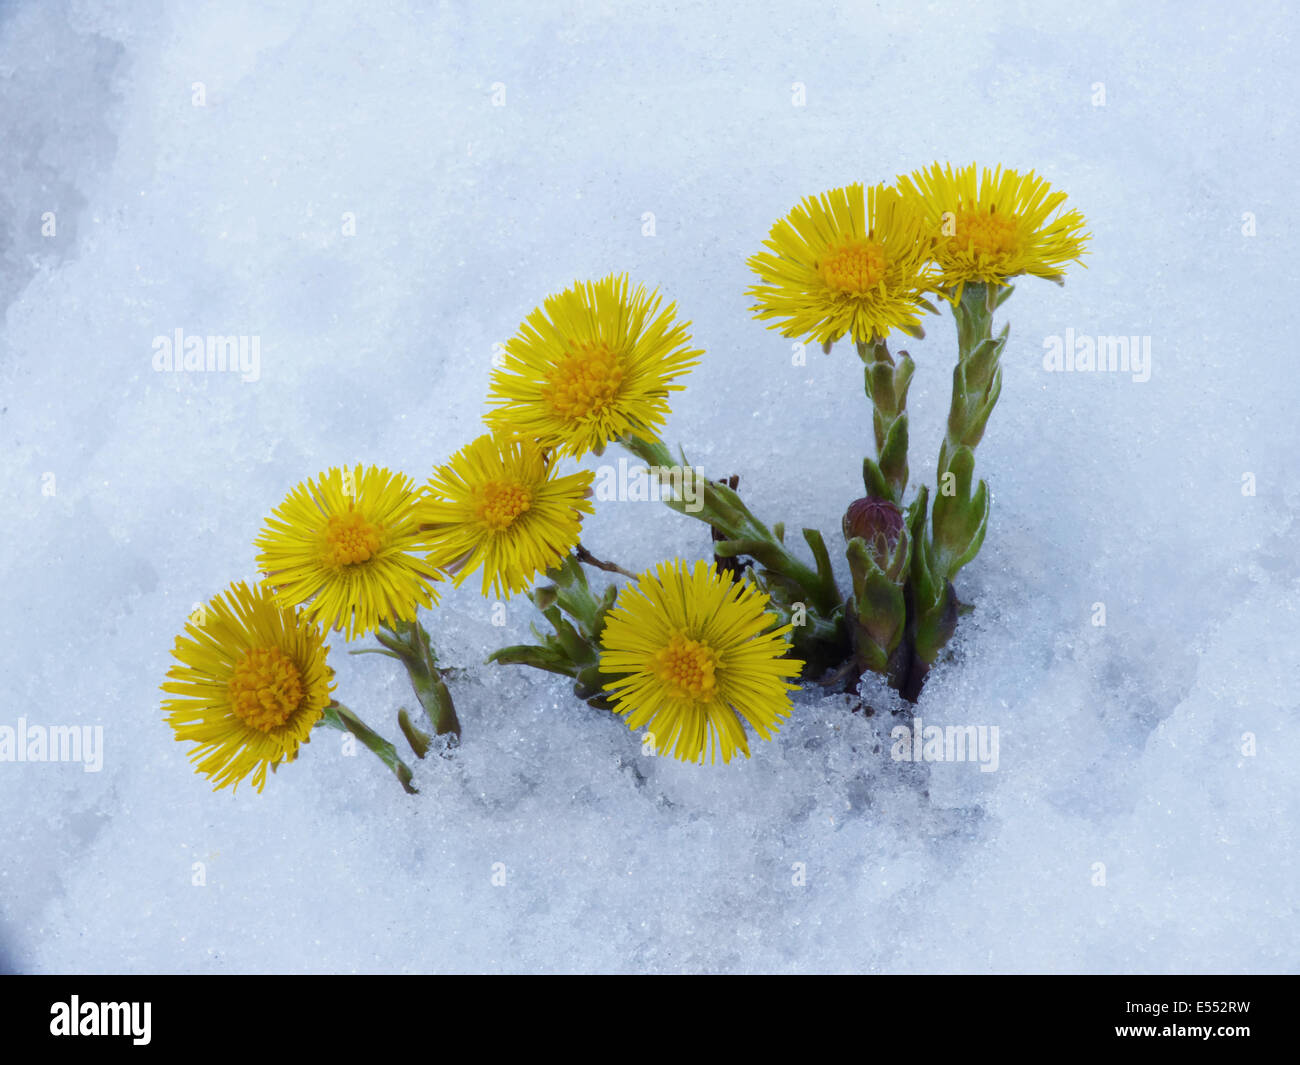 Coltsfoot (Tussilago farfara) flowering, emerging through fresh snow, Cannobina Valley, Italian Alps, Piedmont, Italy, March Stock Photo